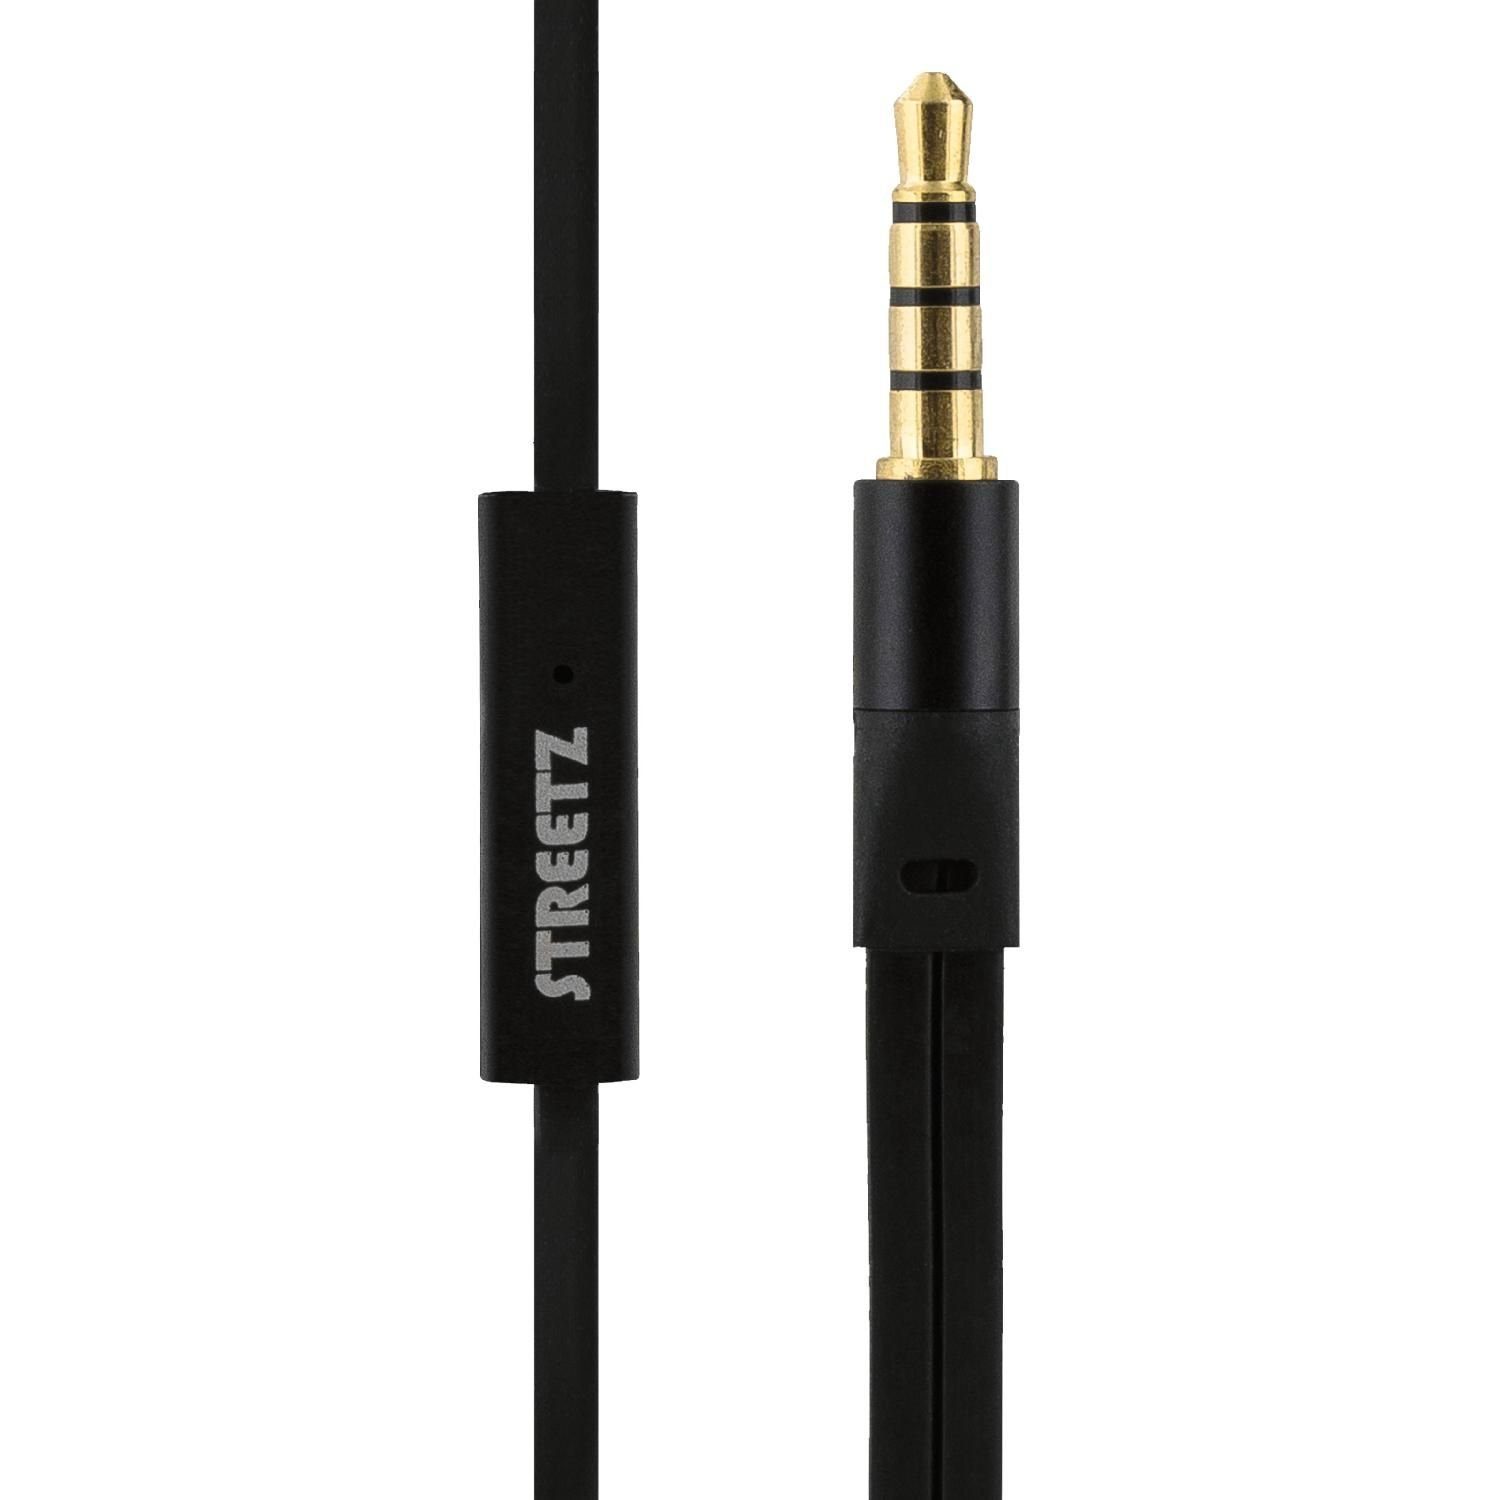 STREETZ HL-W102 Kopfhörer 1.2m Silikonohrstöpsel Herstellergarantie) (integriertes In-Ear Jahre Headset/Kopfhörer Kabel Mikrofon, 3.5mm inkl. 5